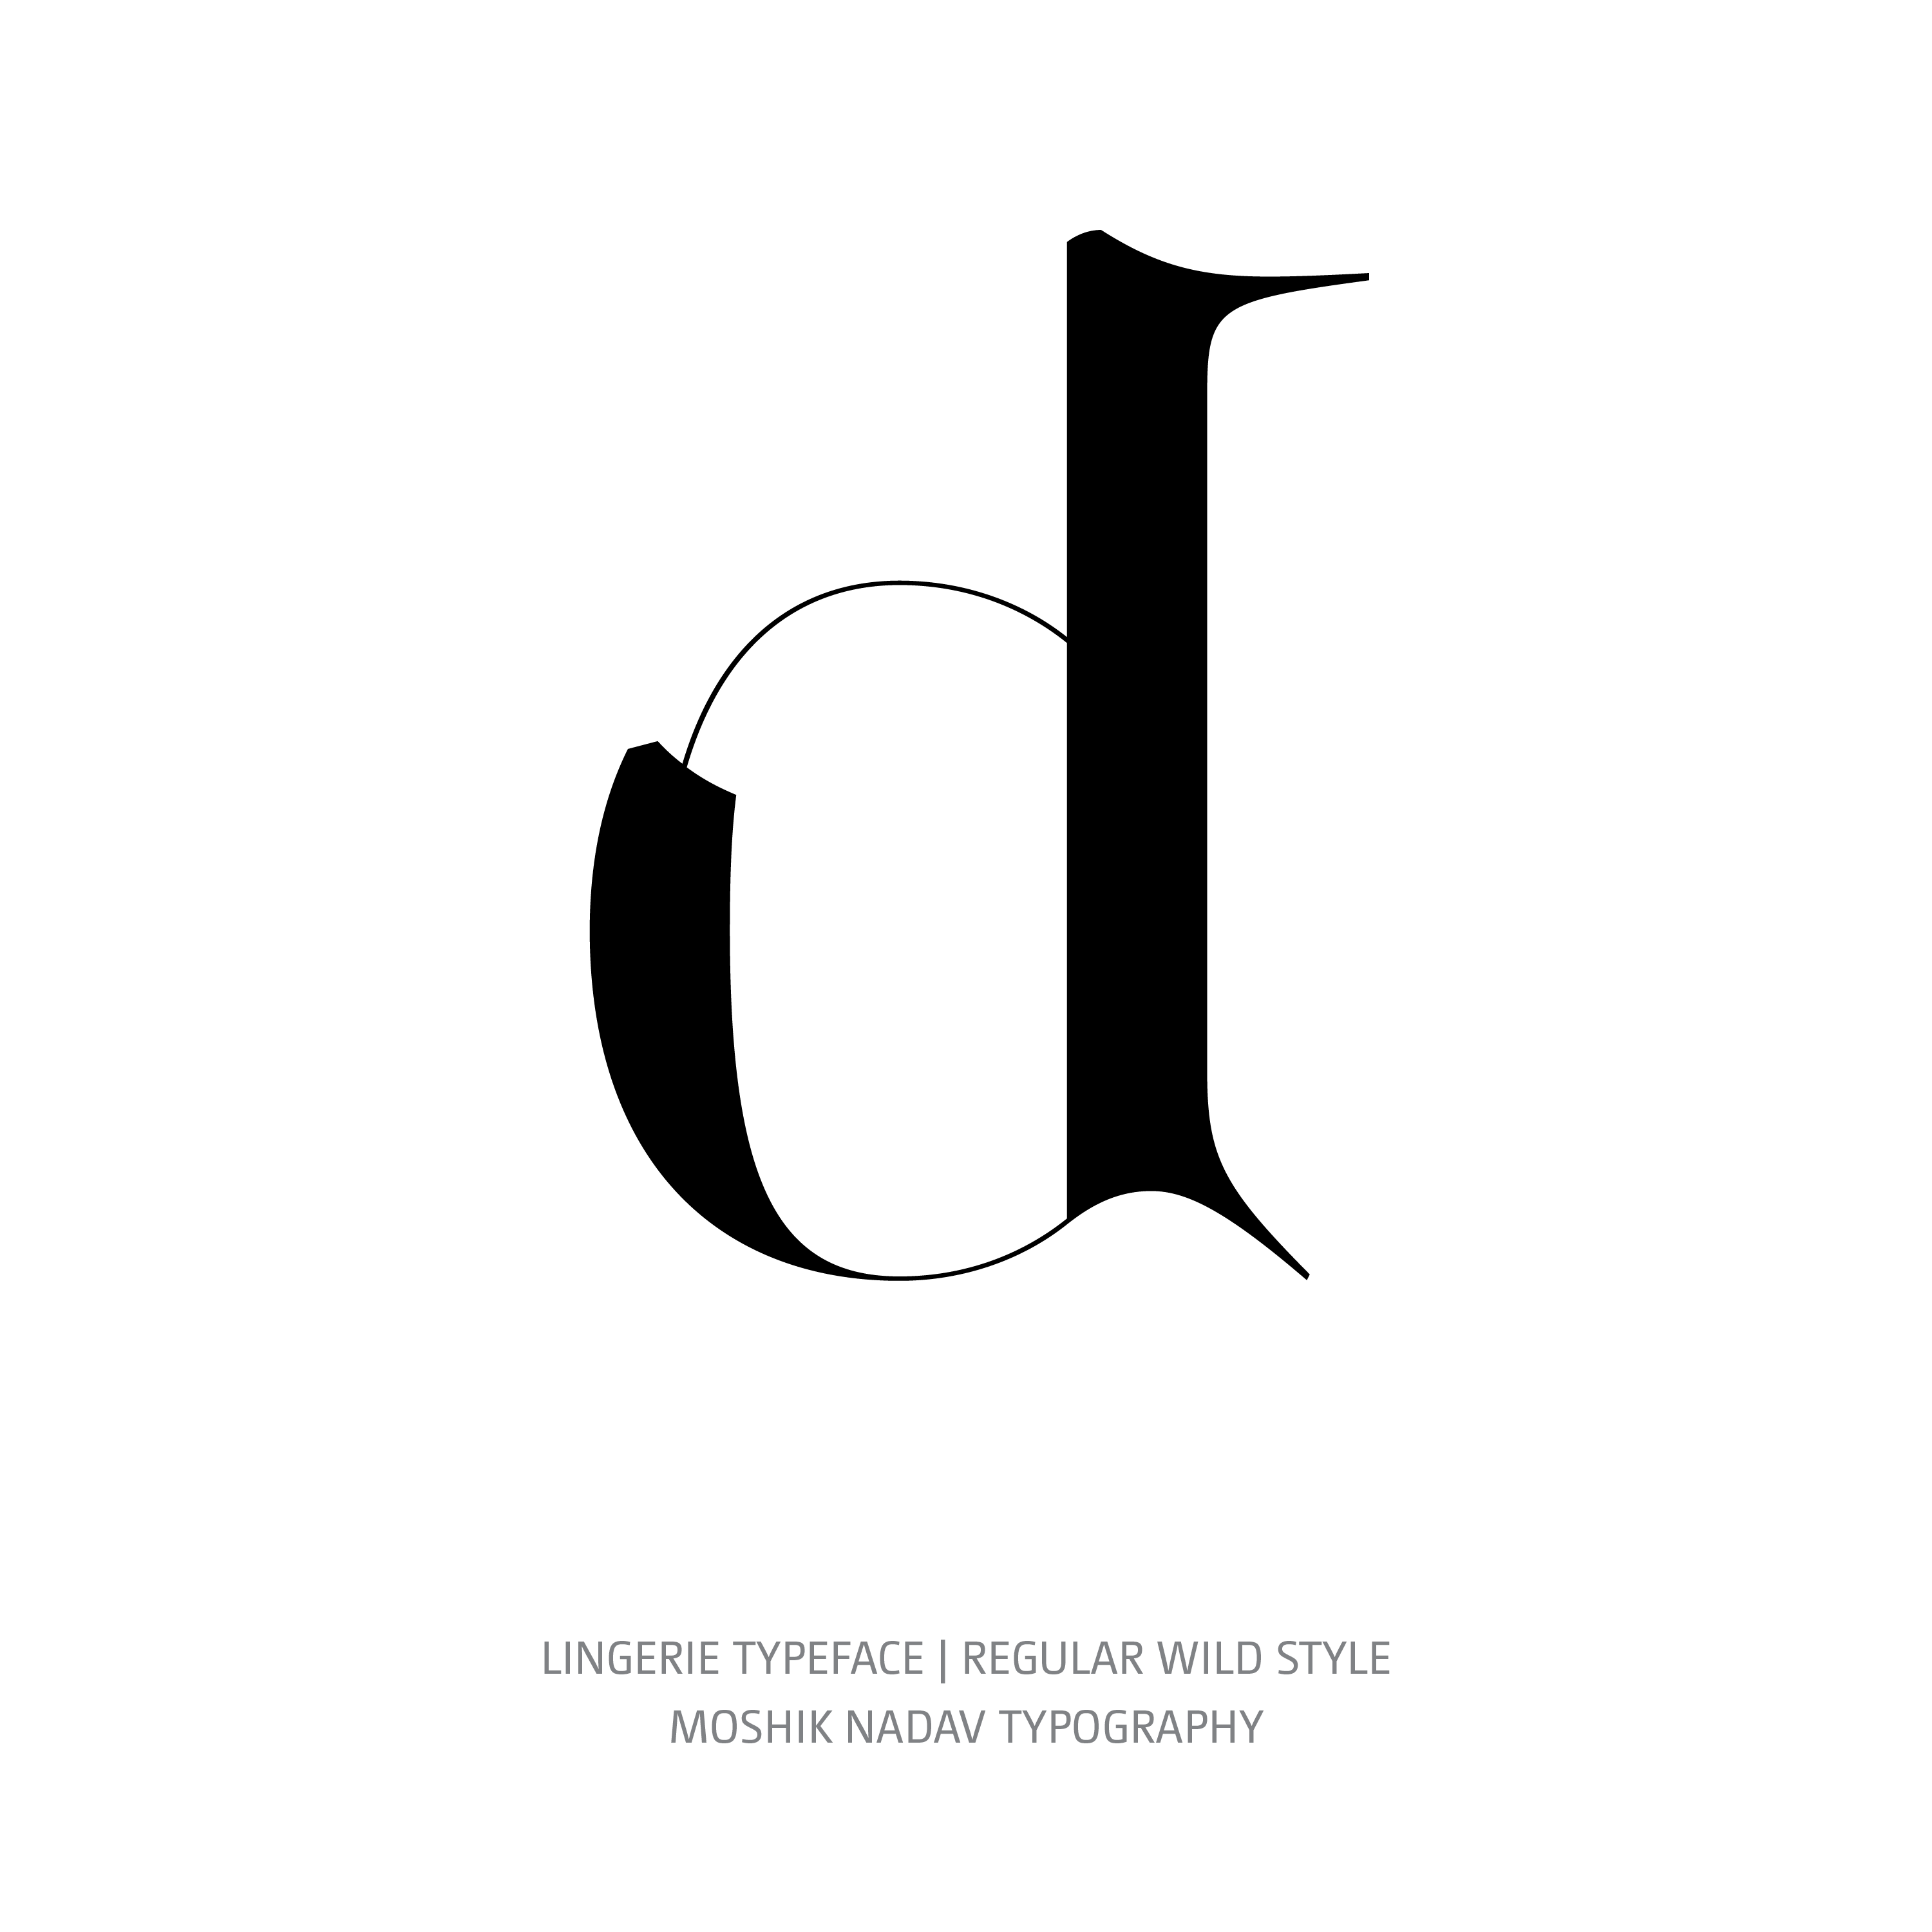 Lingerie Typeface Regular Wild d